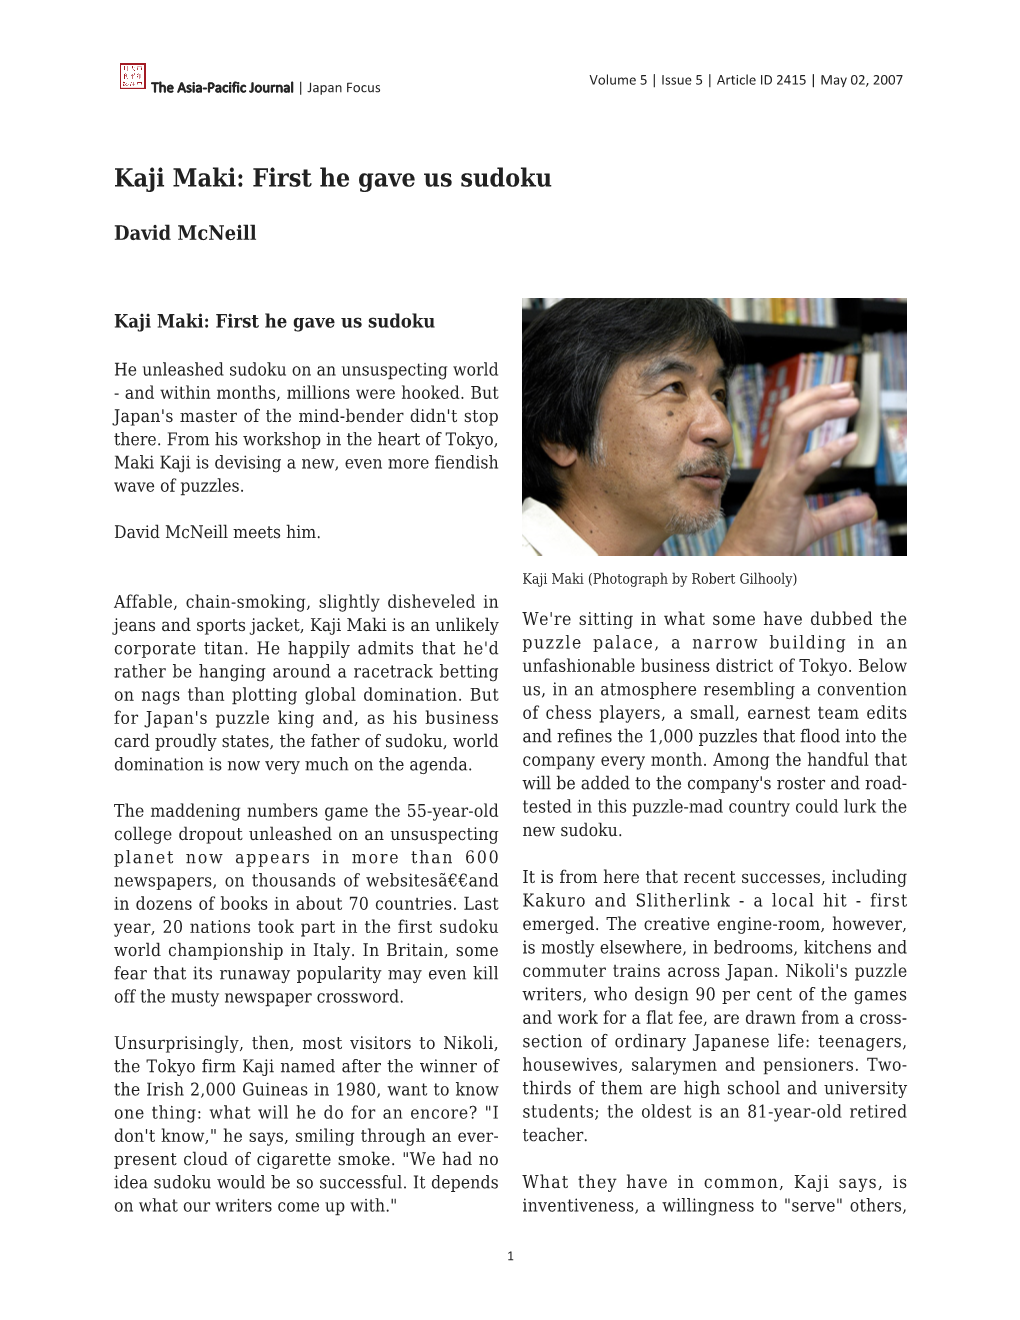 Kaji Maki: First He Gave Us Sudoku